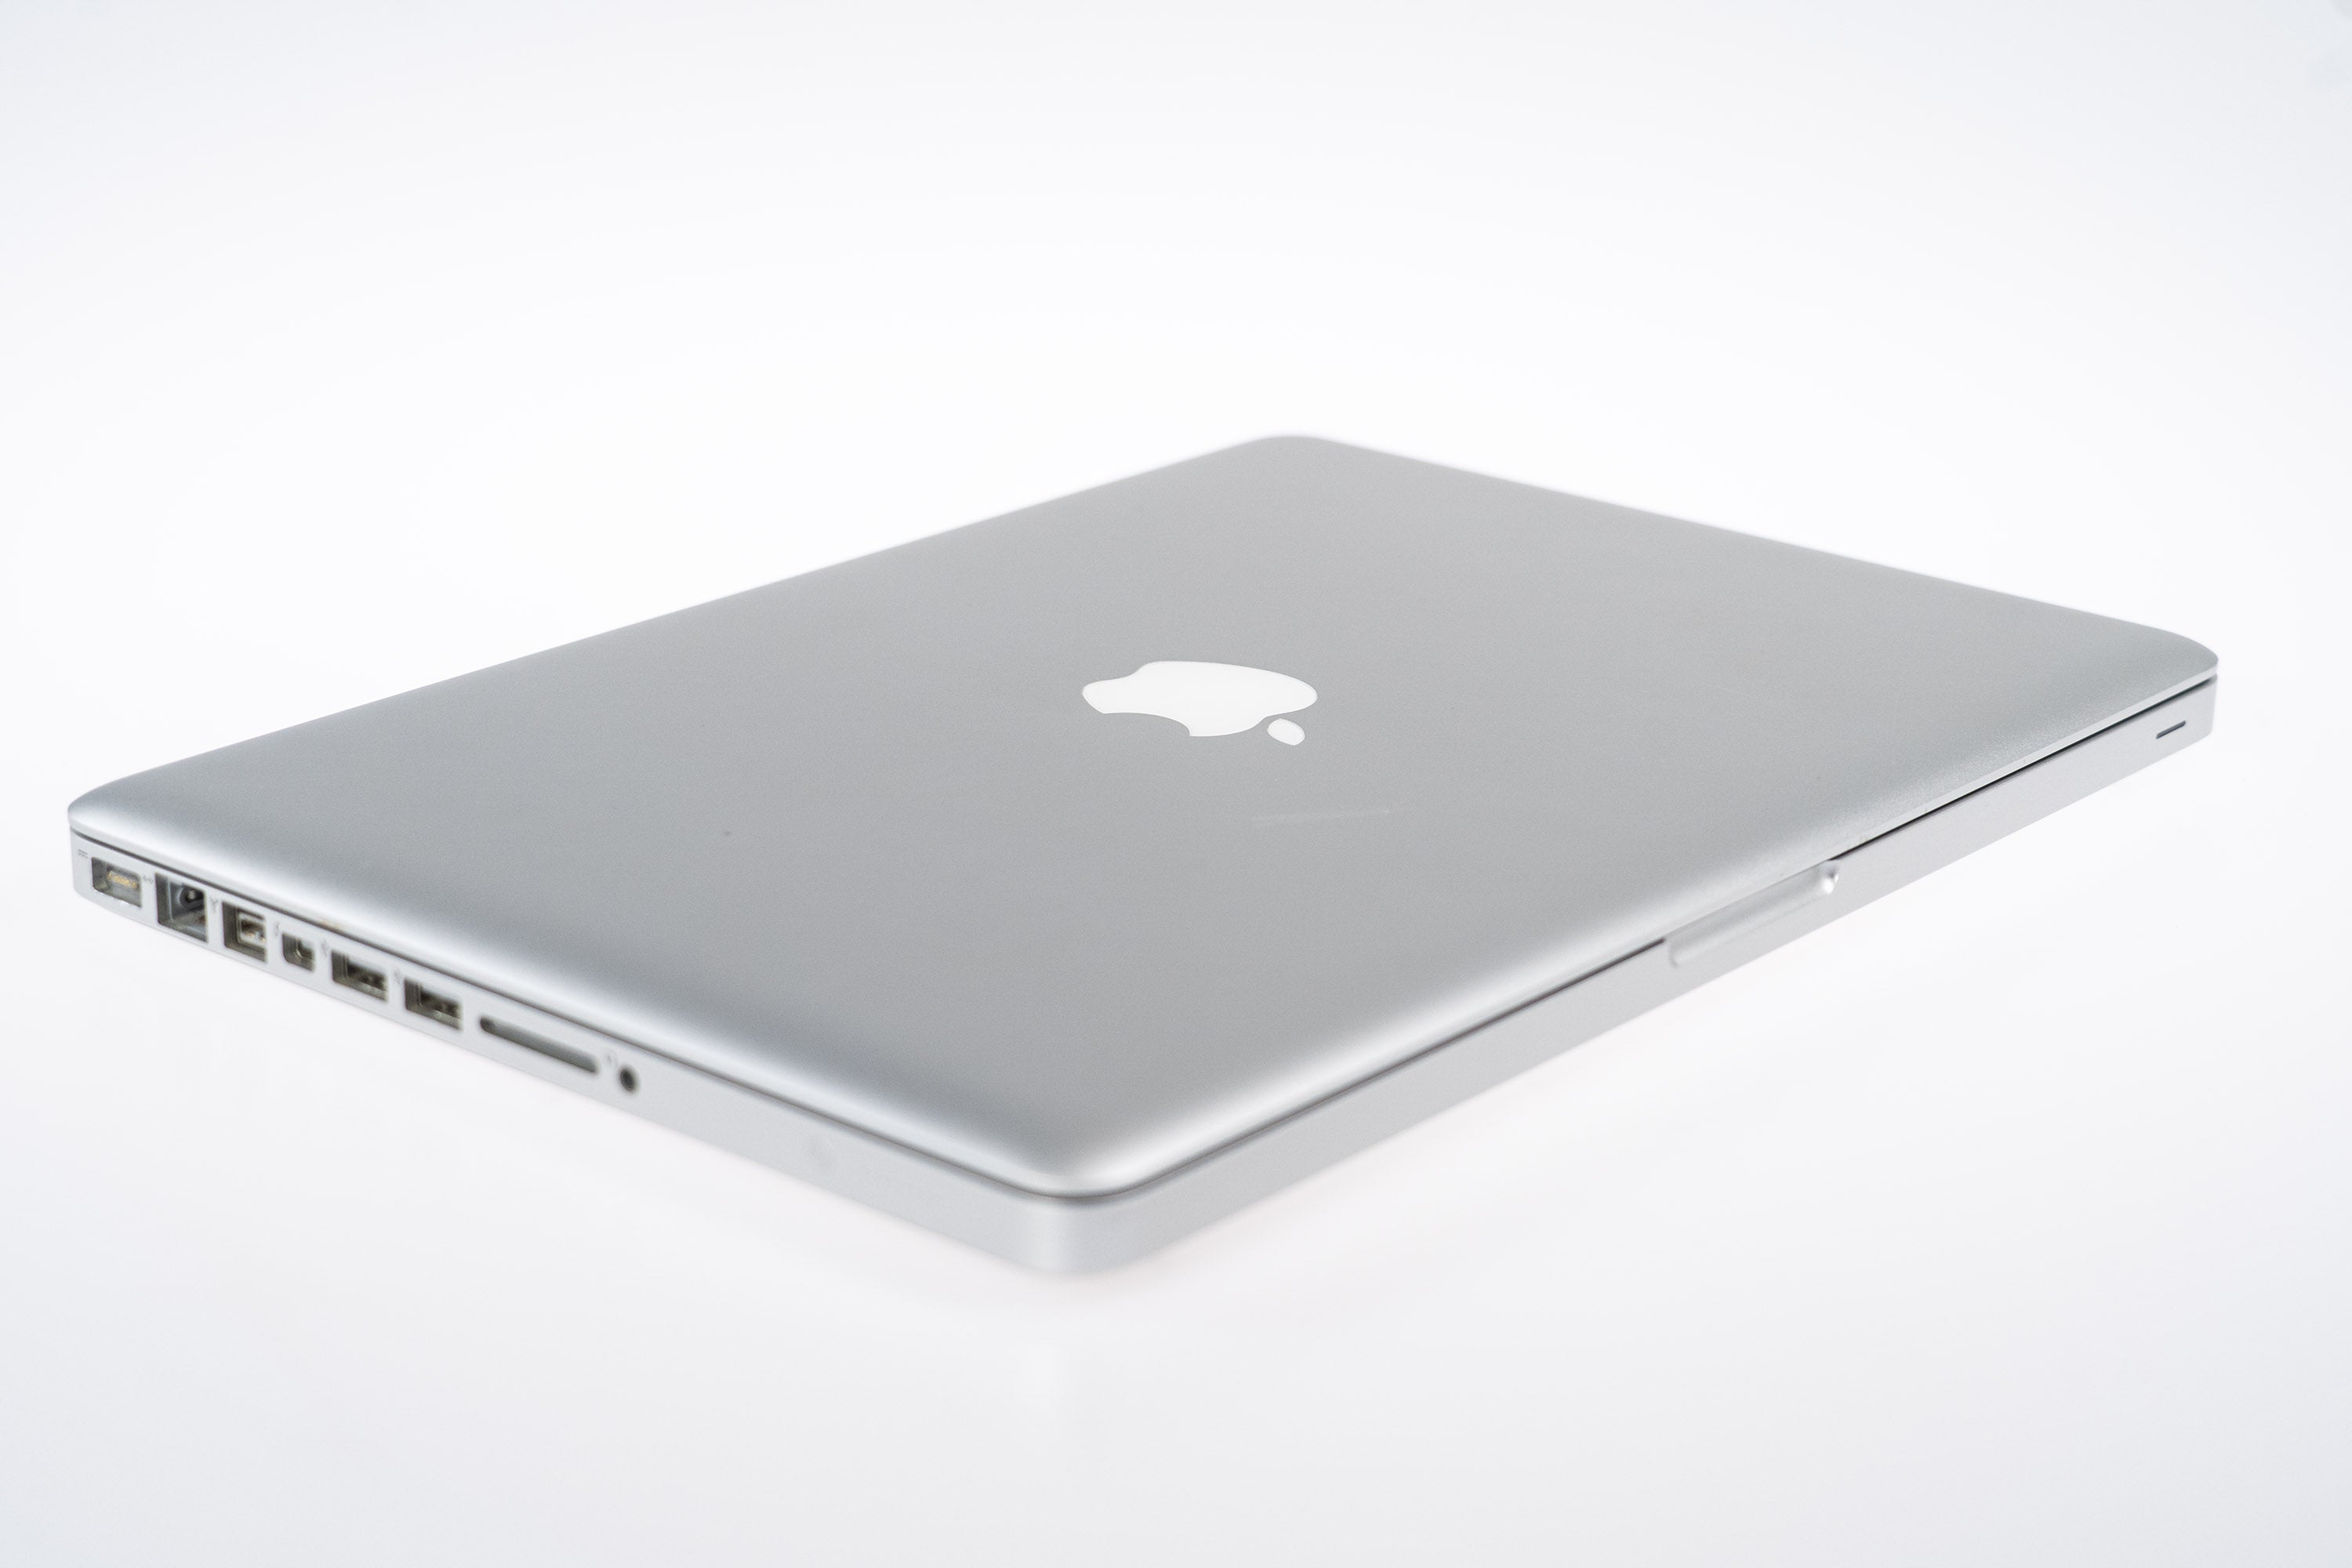 Apple MacBook Pro (13-inch Early 2011) 2.3 GHz 8GB RAM 512GB SSD (Silver)